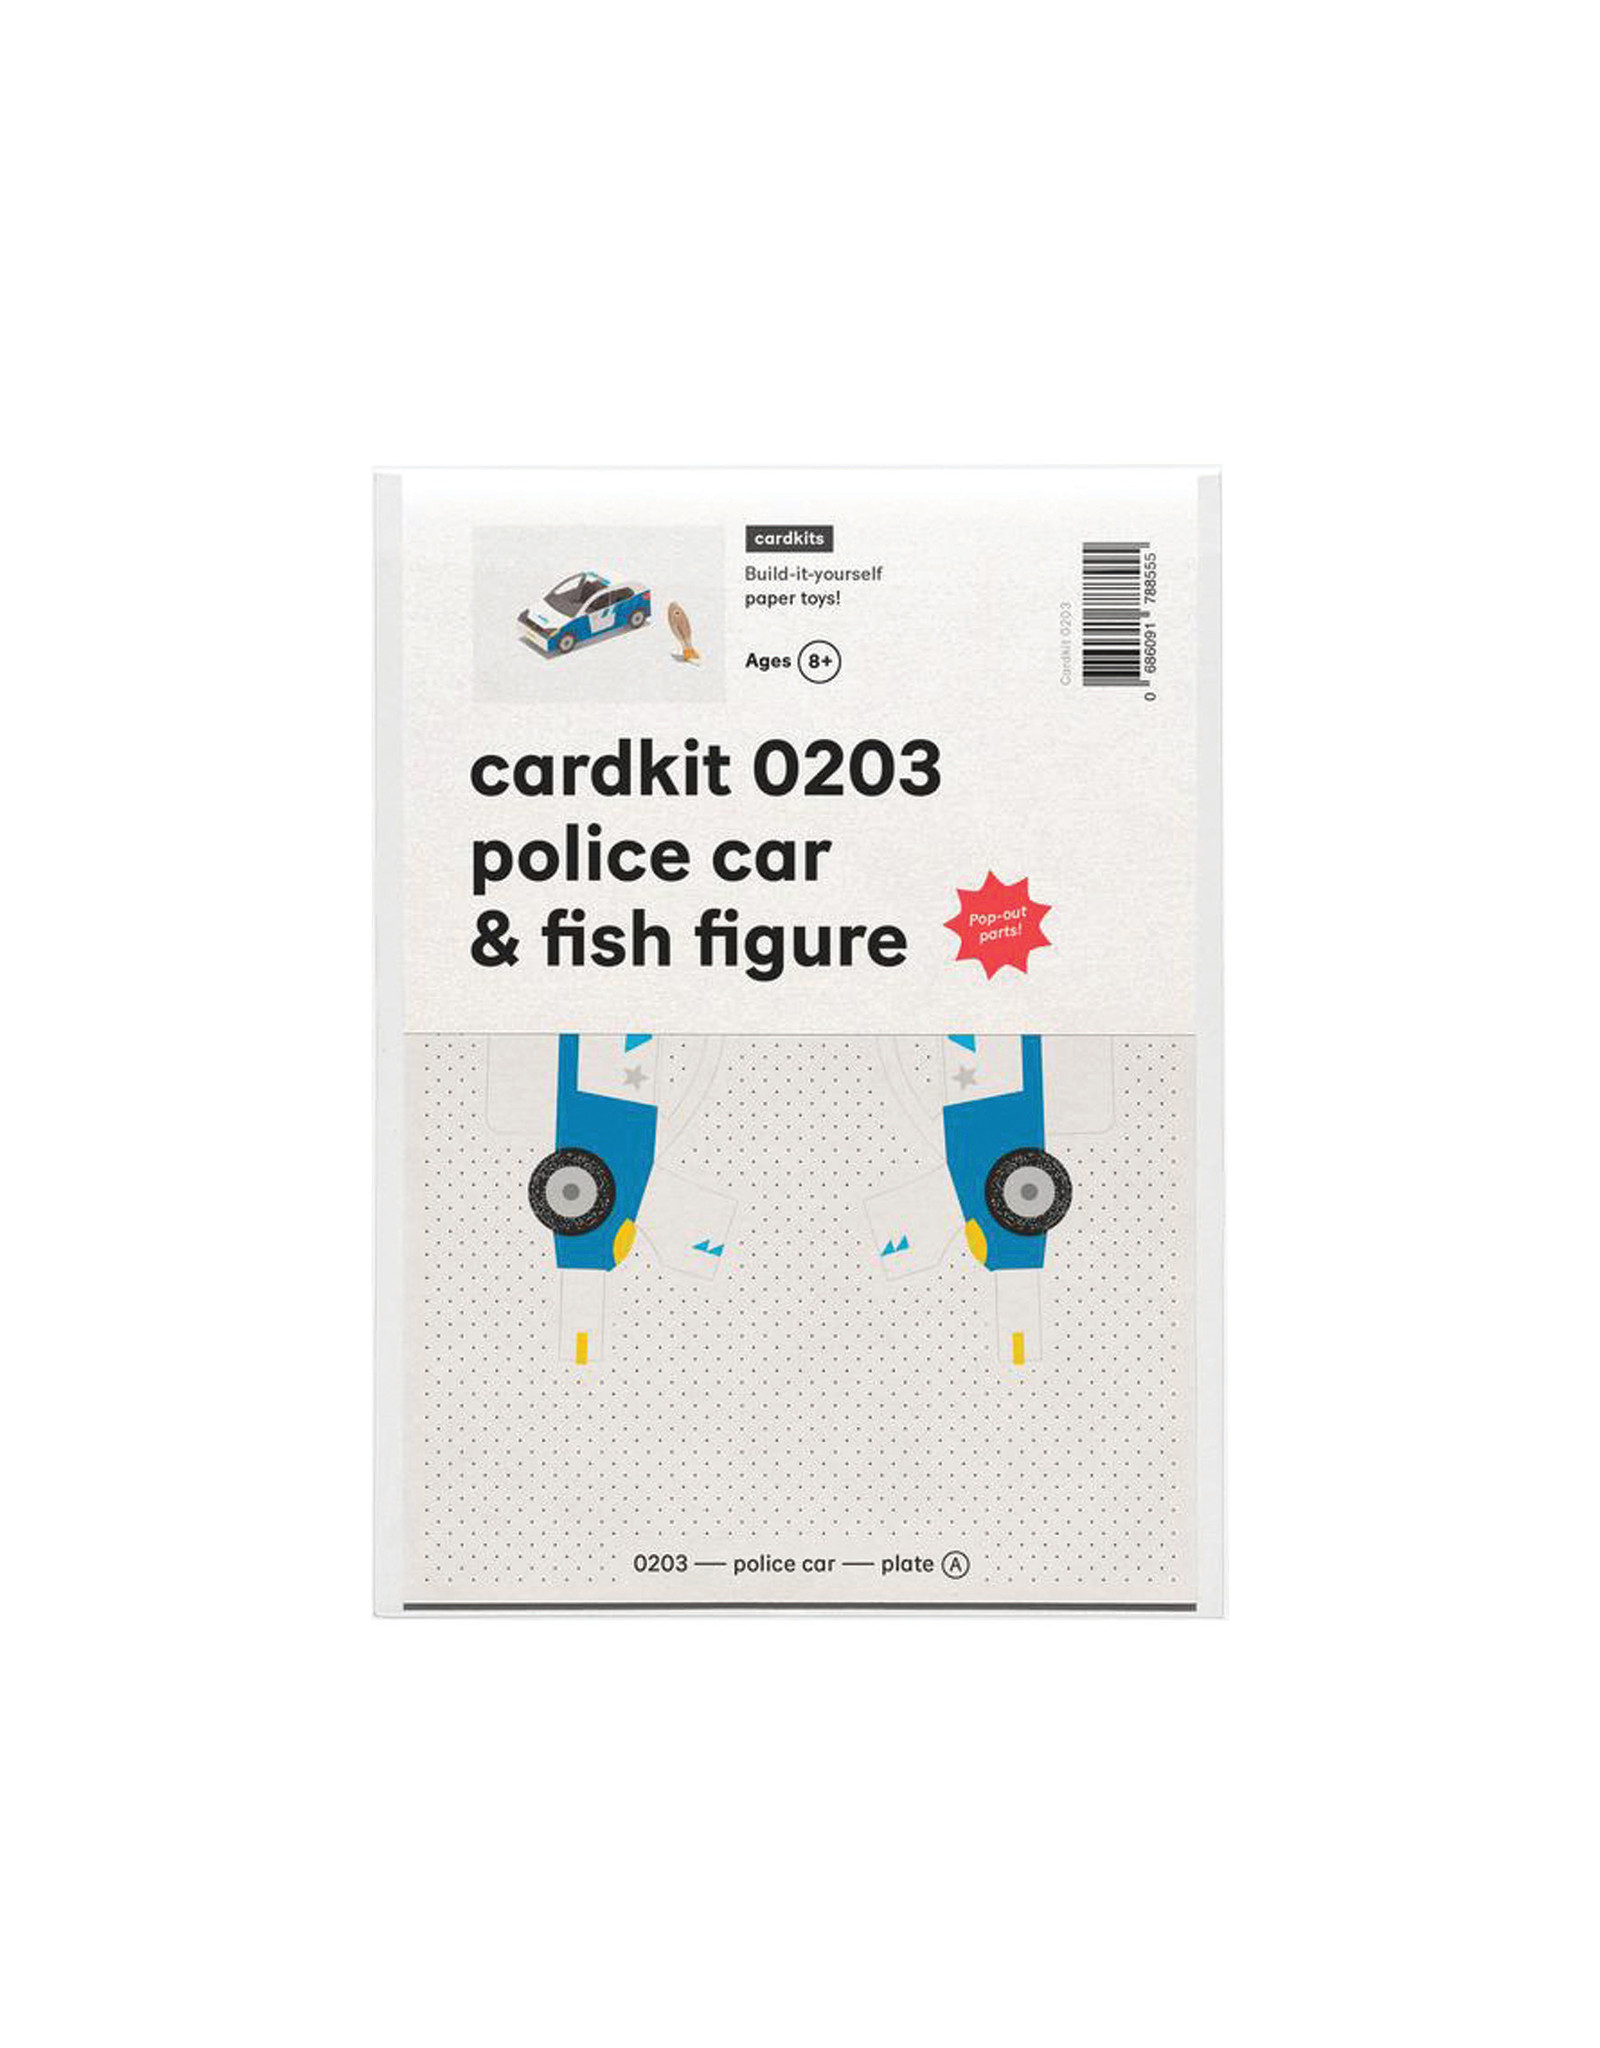 cardkit 0203: police car & fish figure